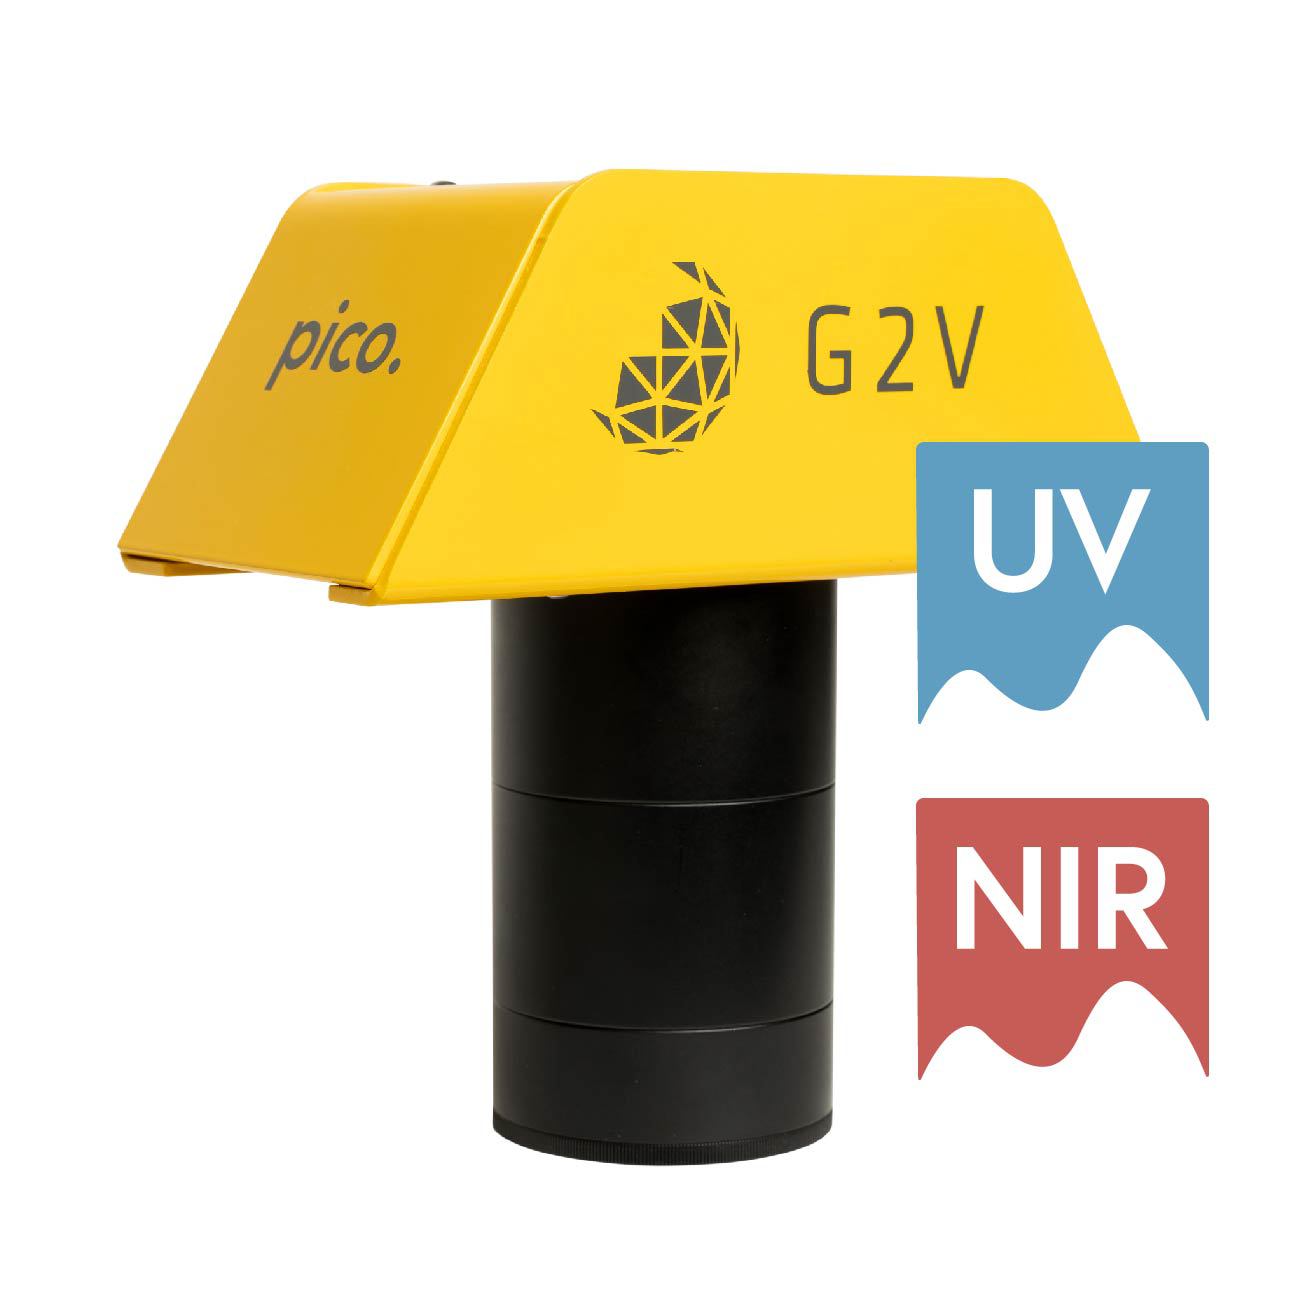 pico solar simulator with UV and NIR ribbon